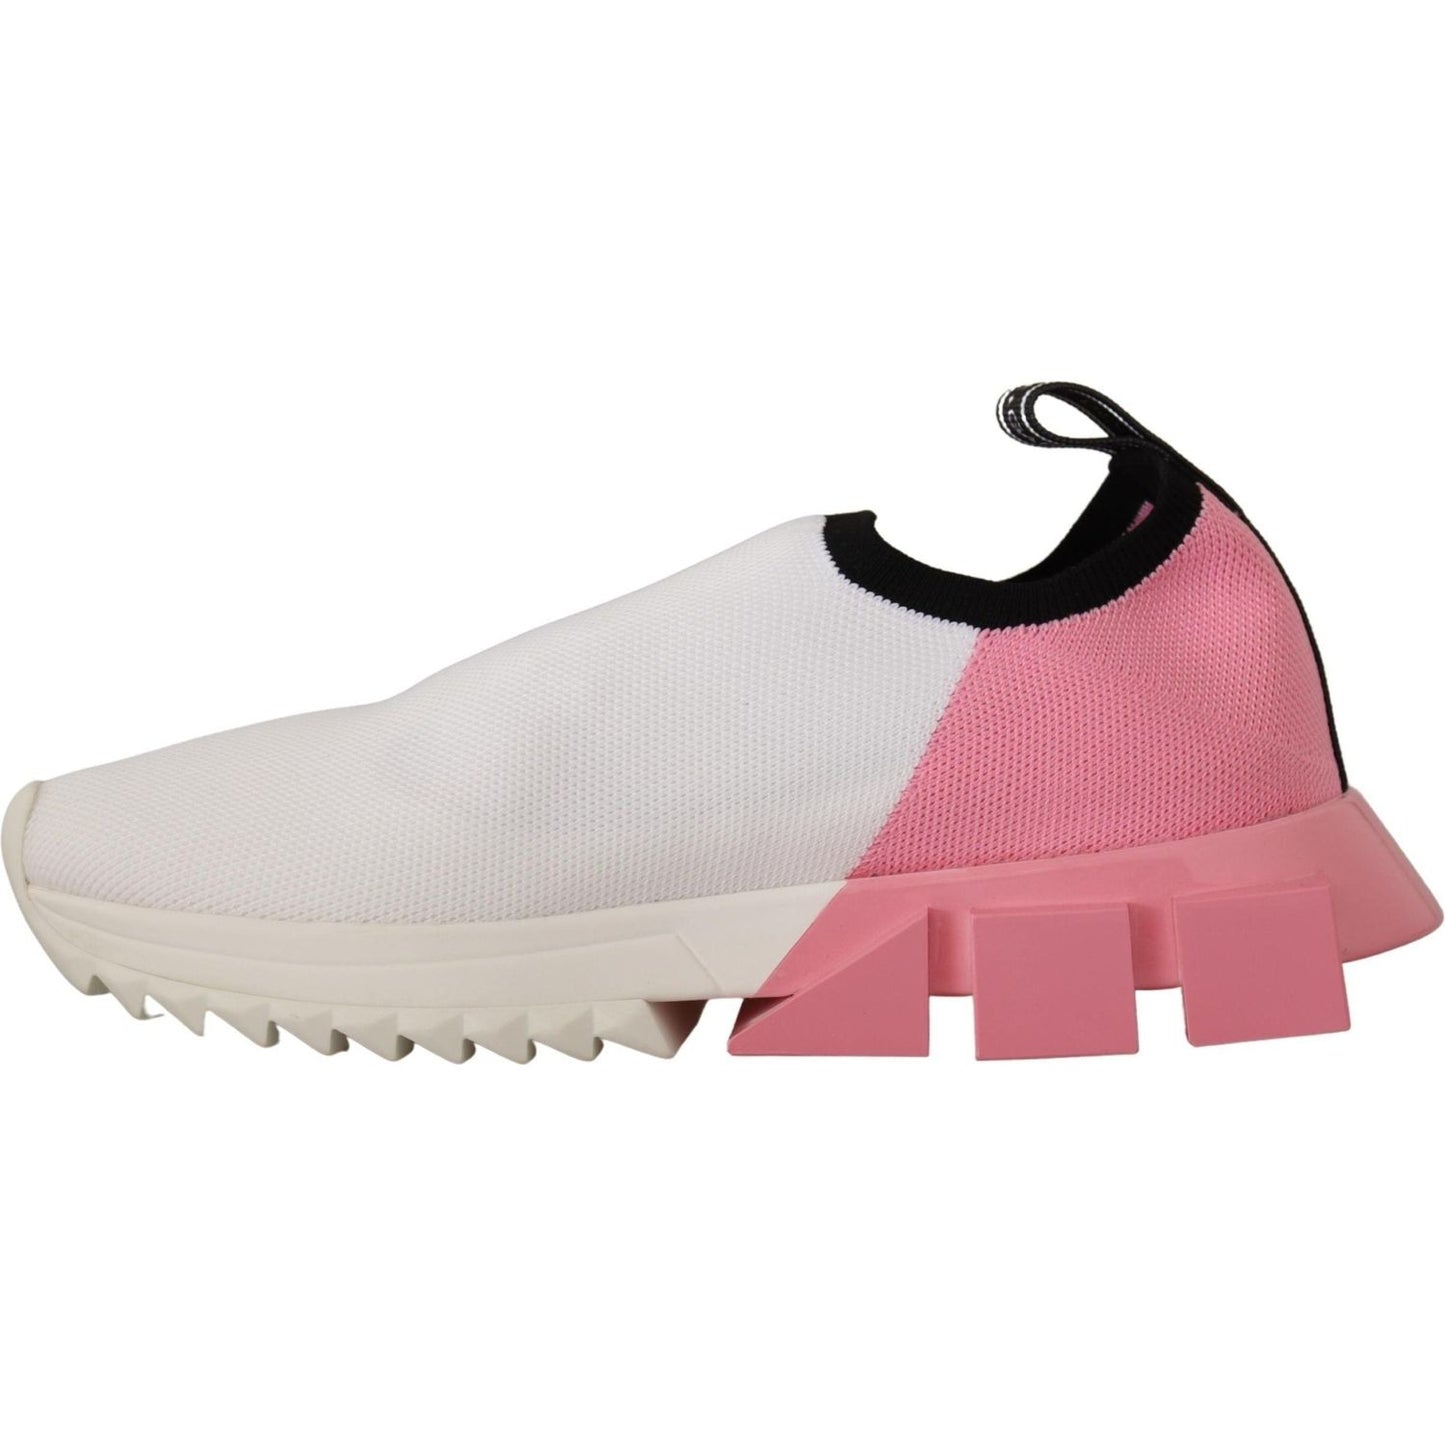 Dolce & Gabbana Elegant Sorrento Slip-On Sneakers in White & Pink pink-white-logo-womens-sorrento-sneakers